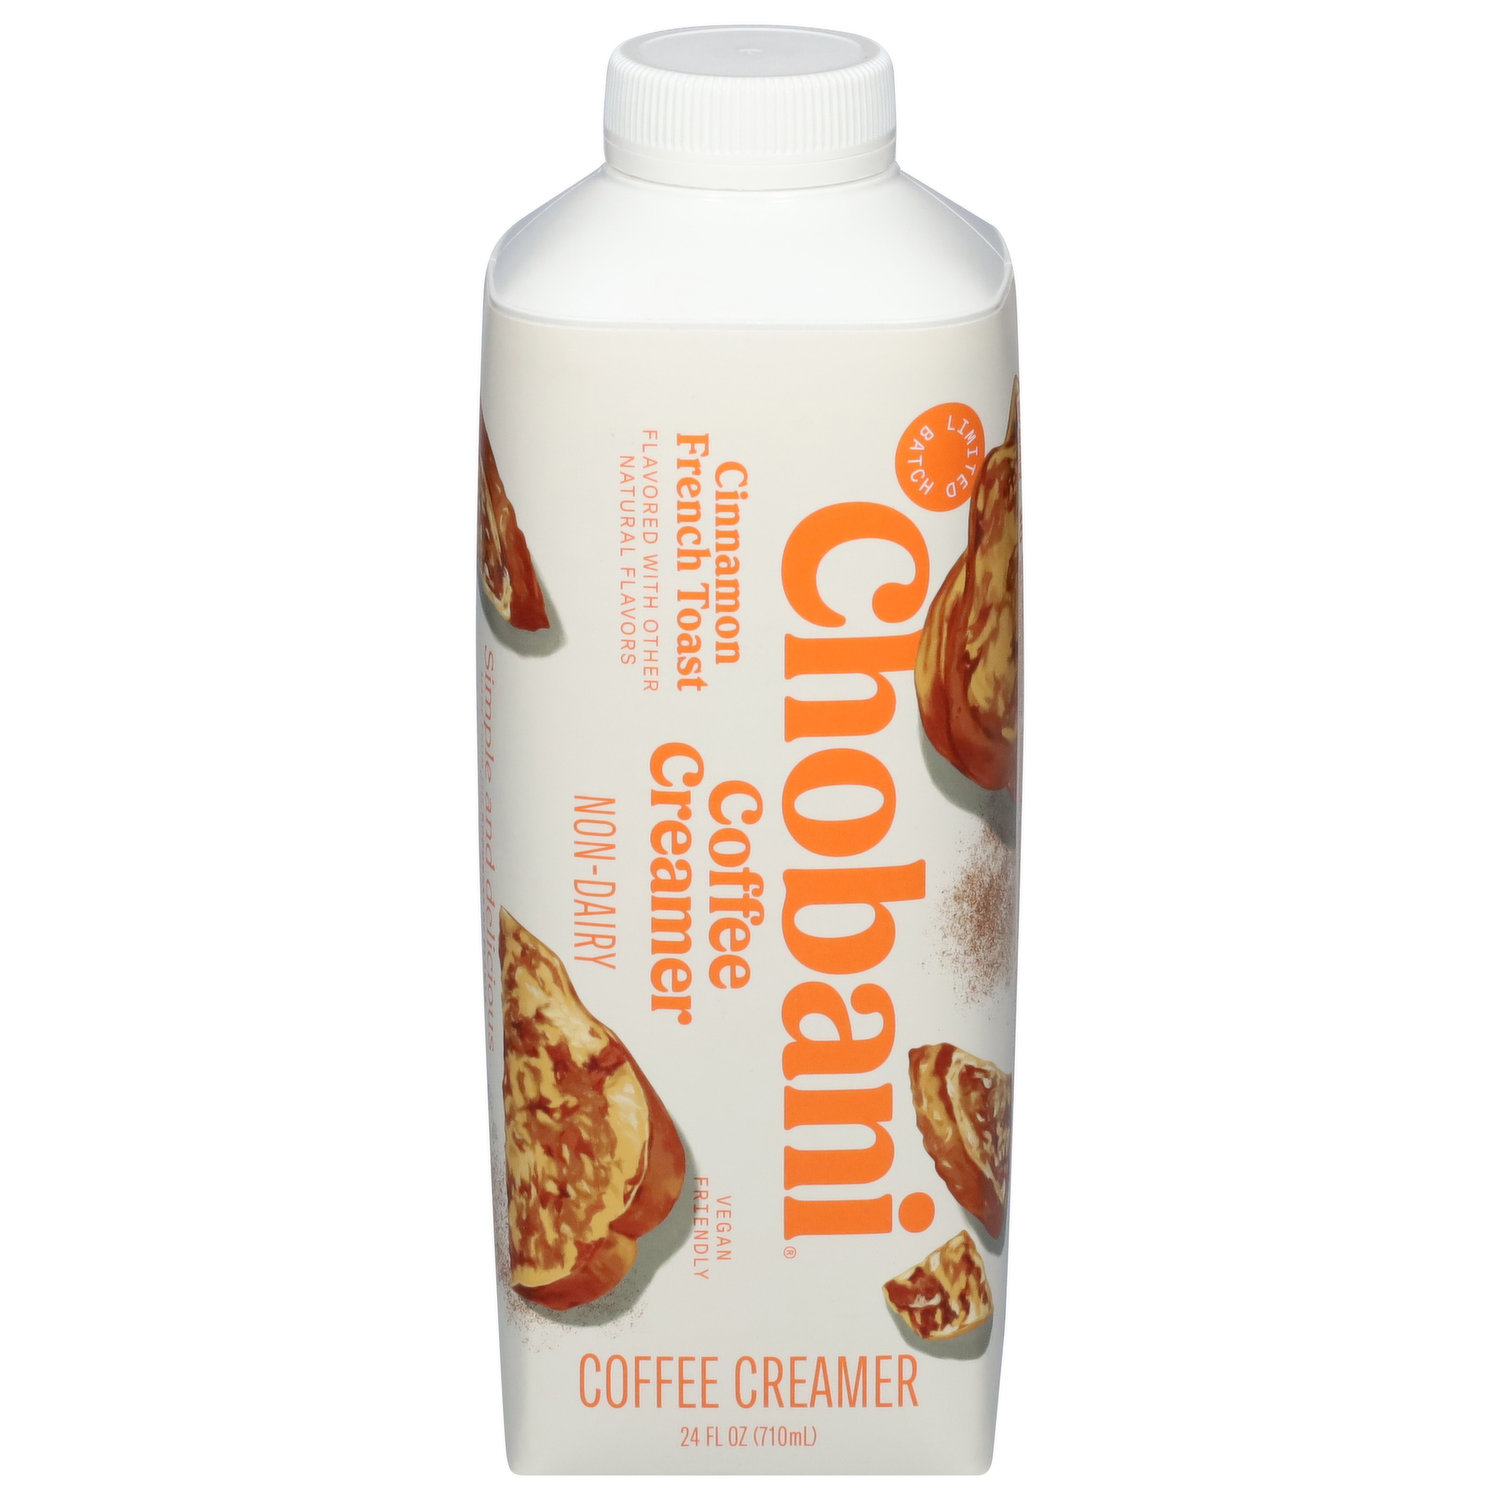 So Delicious Dairy Free Original Coconutmilk Organic Creamer 32 Fl Oz, Creamers & Sweeteners